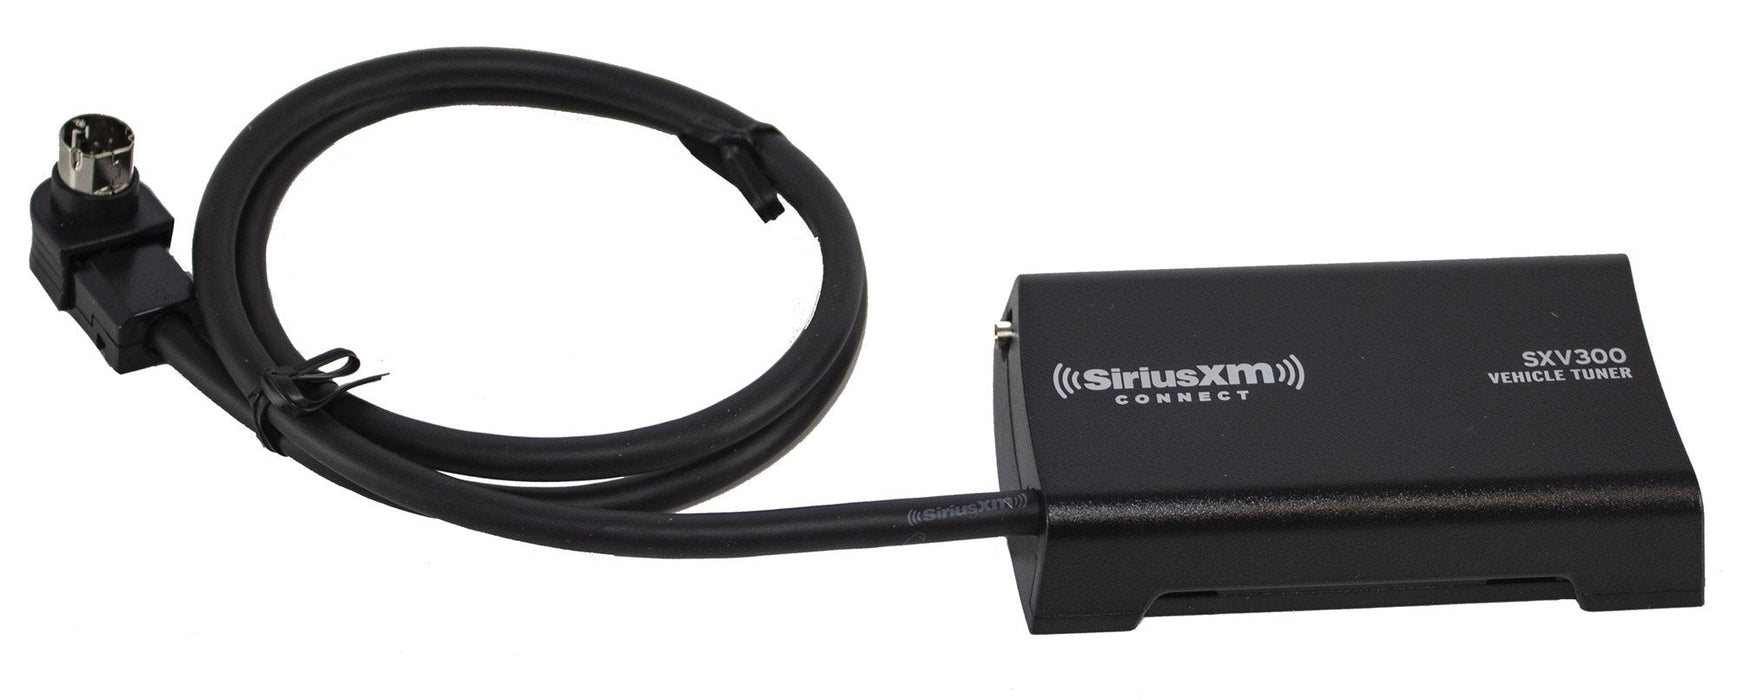 Power Acoustik 6.2" LCD 2DIN DVD Player Bluetooth Sirius XM Tuner PH-620SXMB